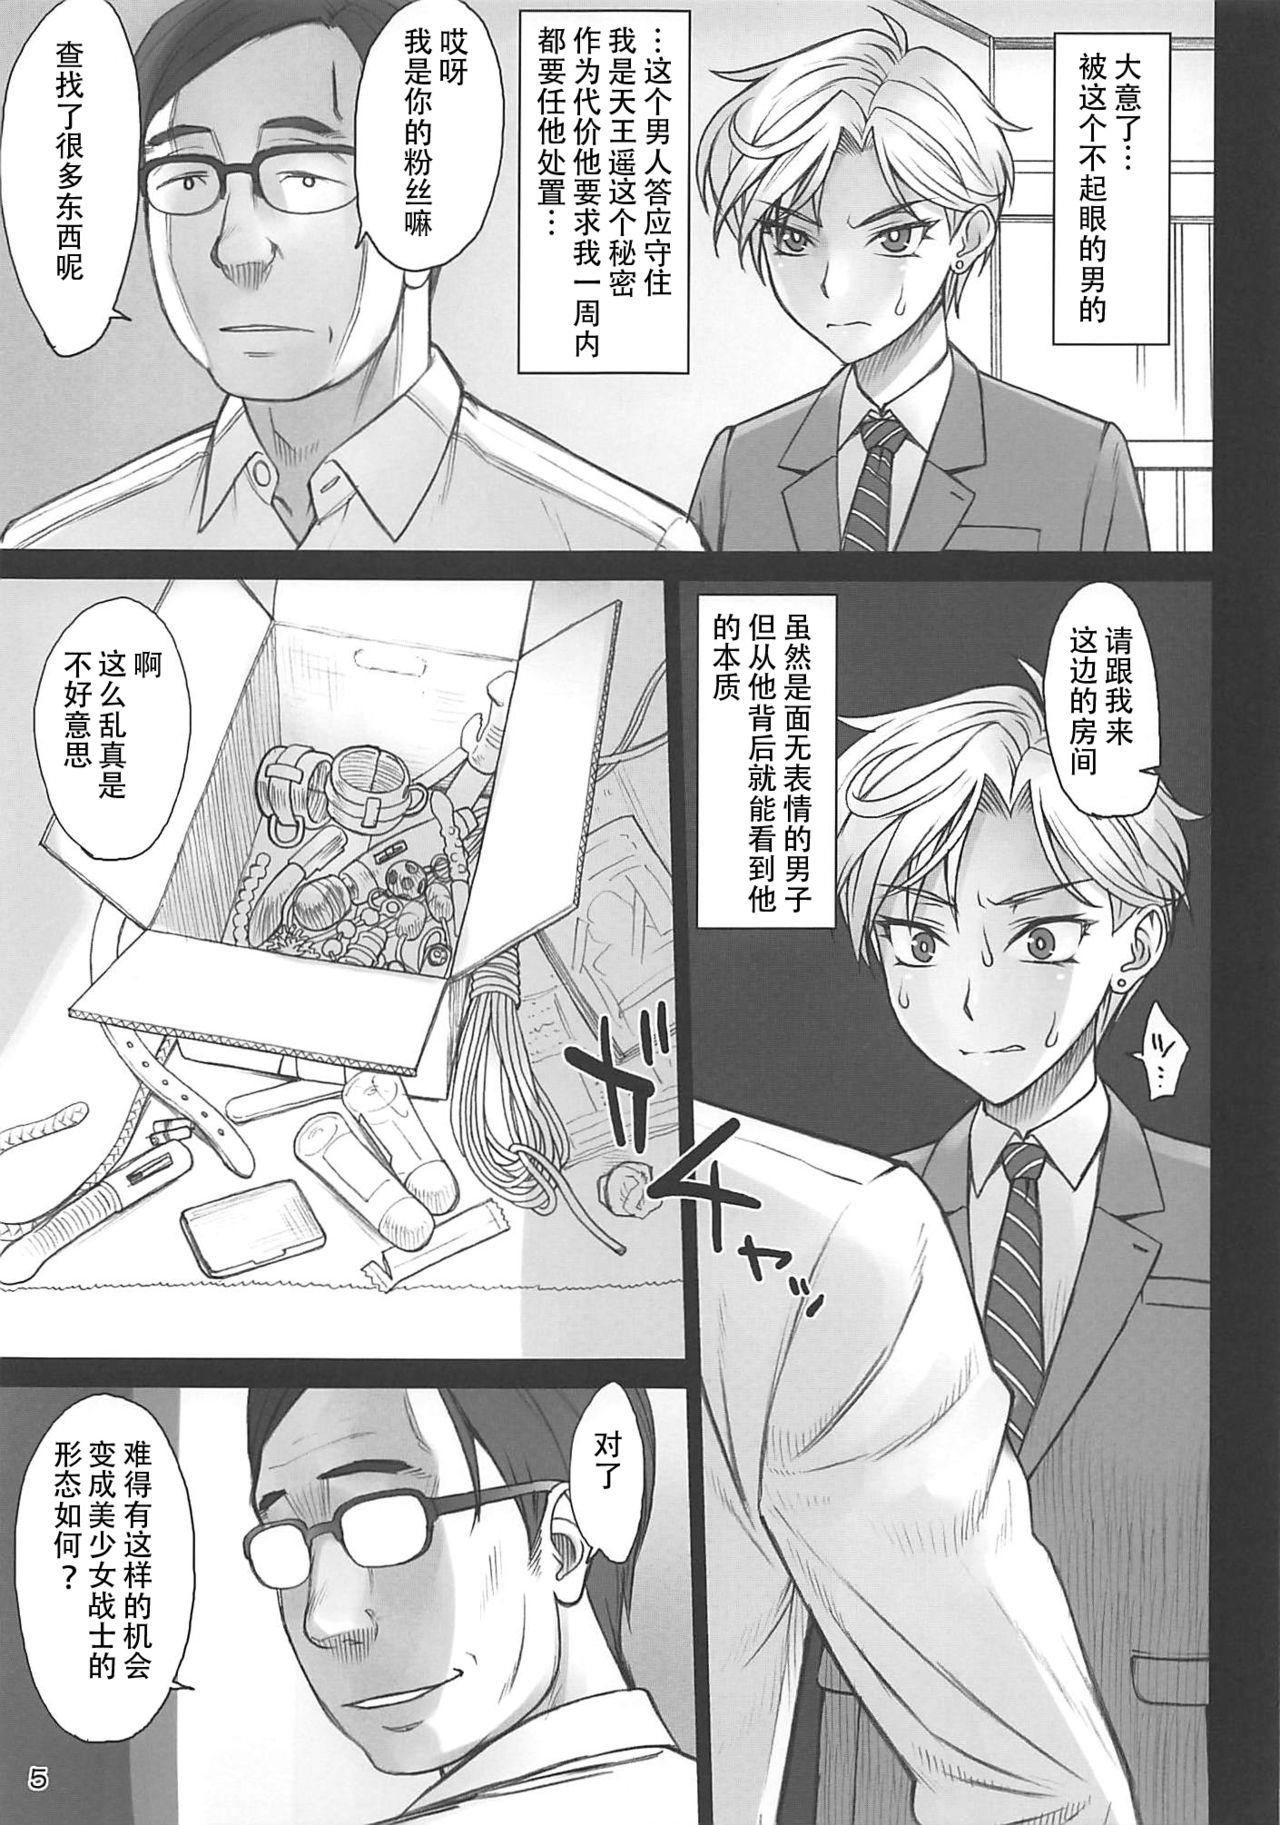 Sexteen Uranus-san ga makeru wake ga nai - Sailor moon Fun - Page 5